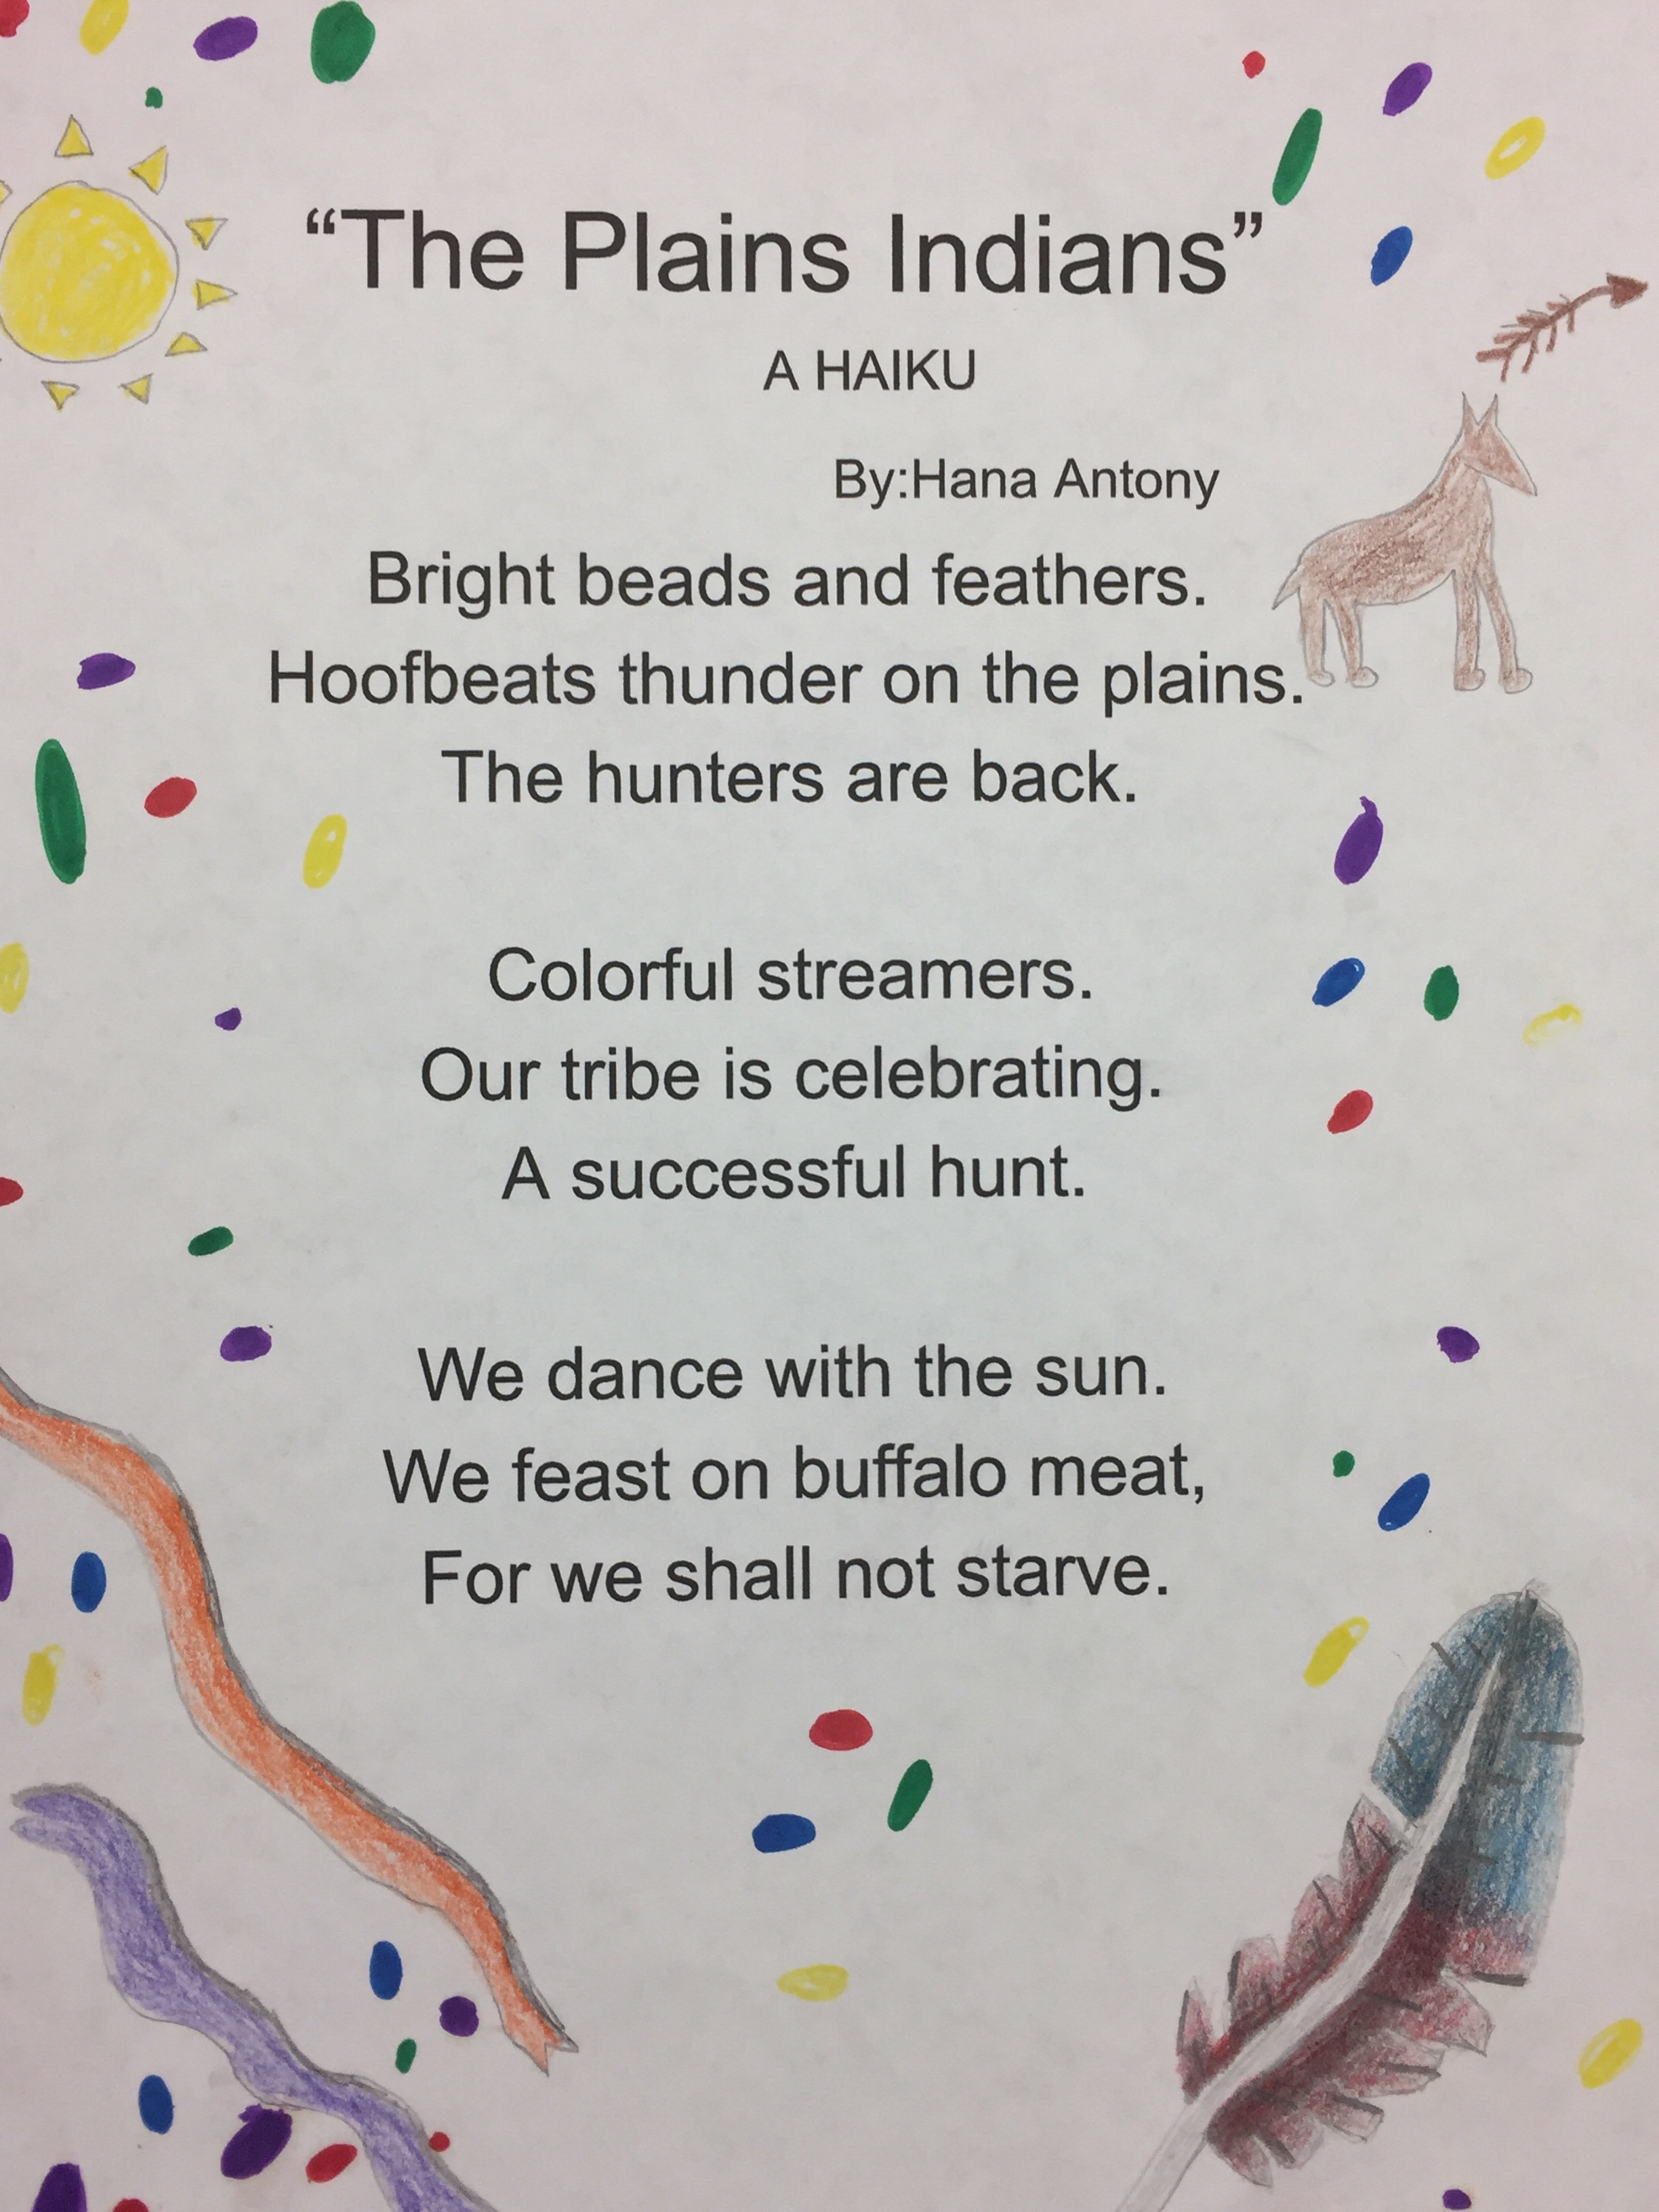 haiku poem examples